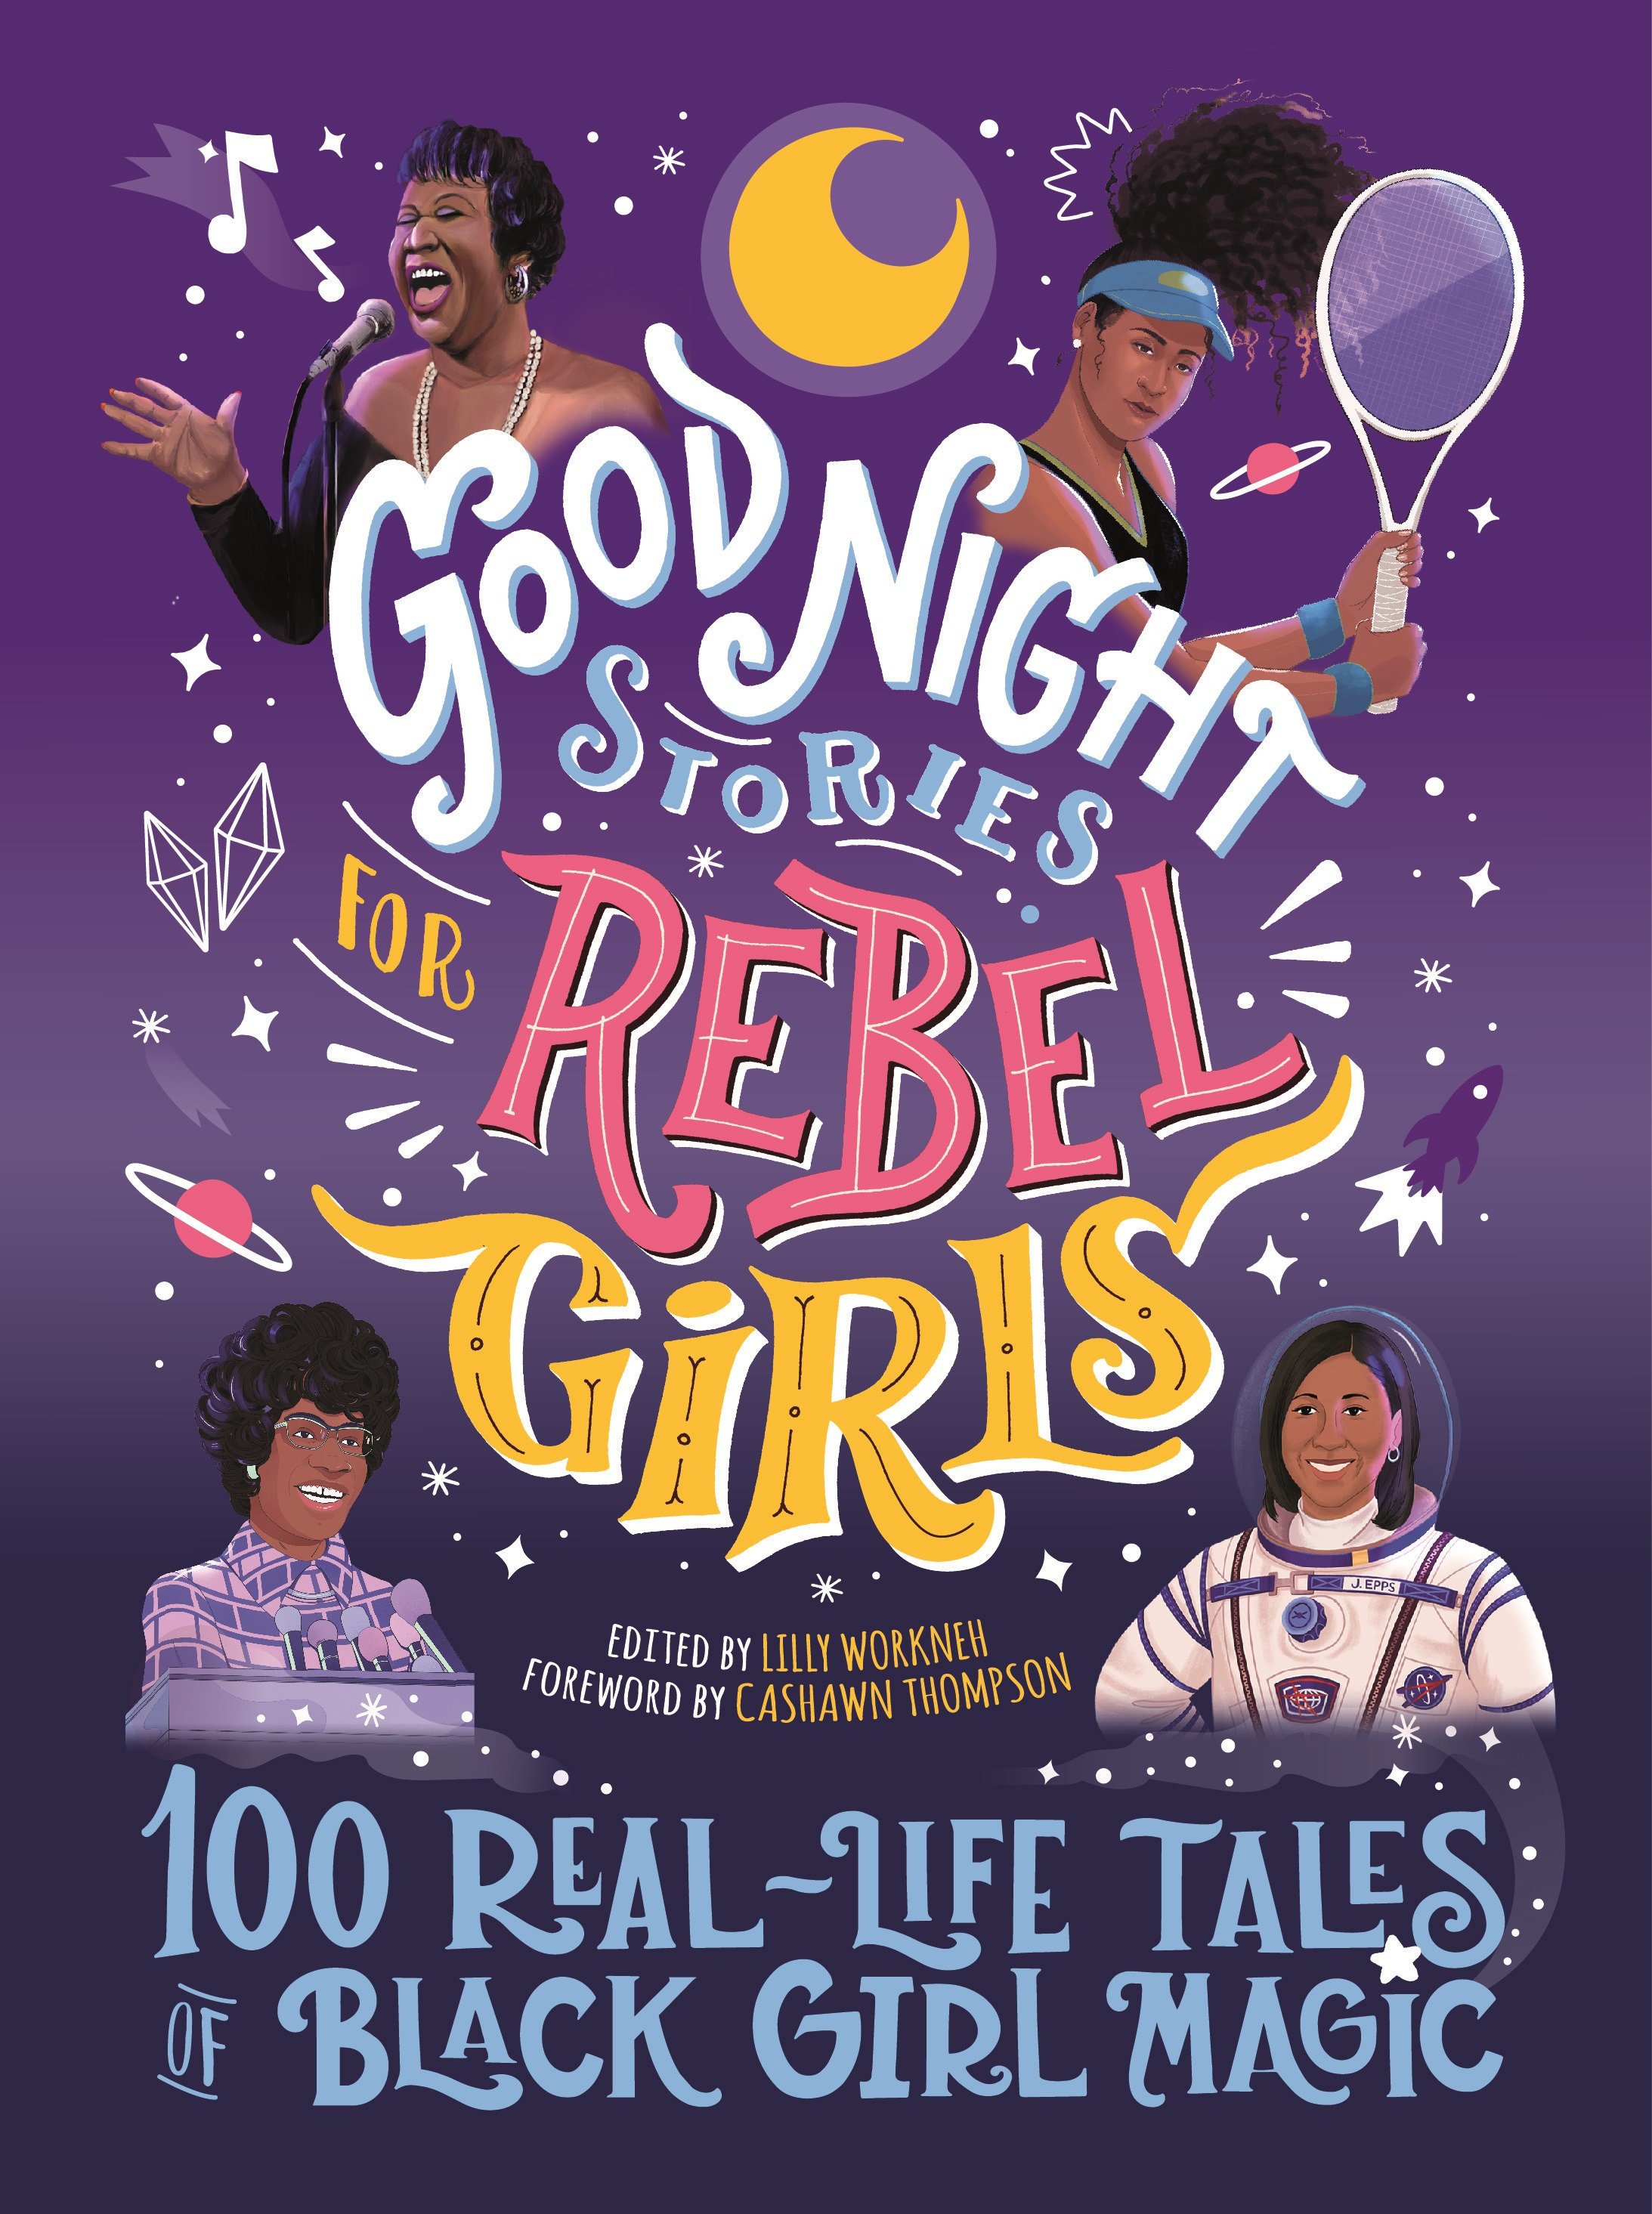 100 Real-Life Tales of Black Girl Magic: Good Night Stories For Rebel Girls